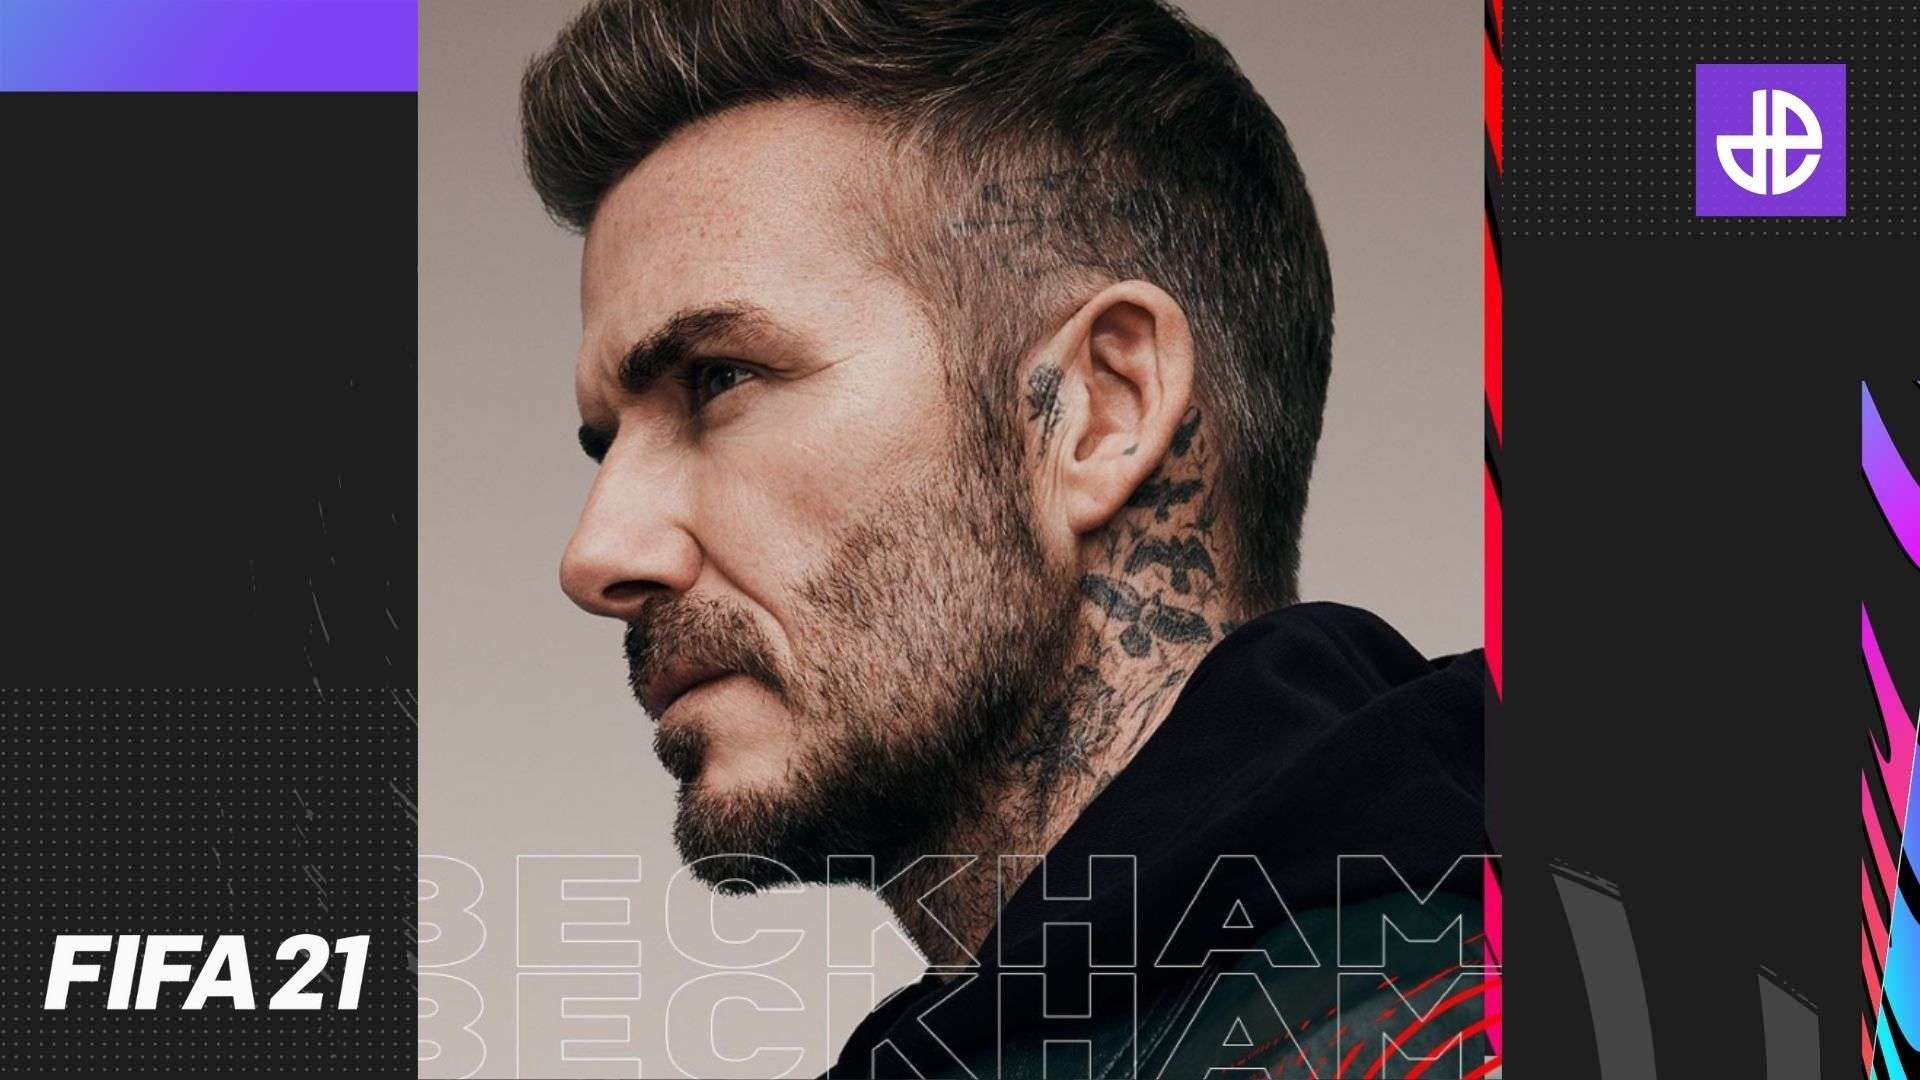 FIFA 21 David Beckham edition